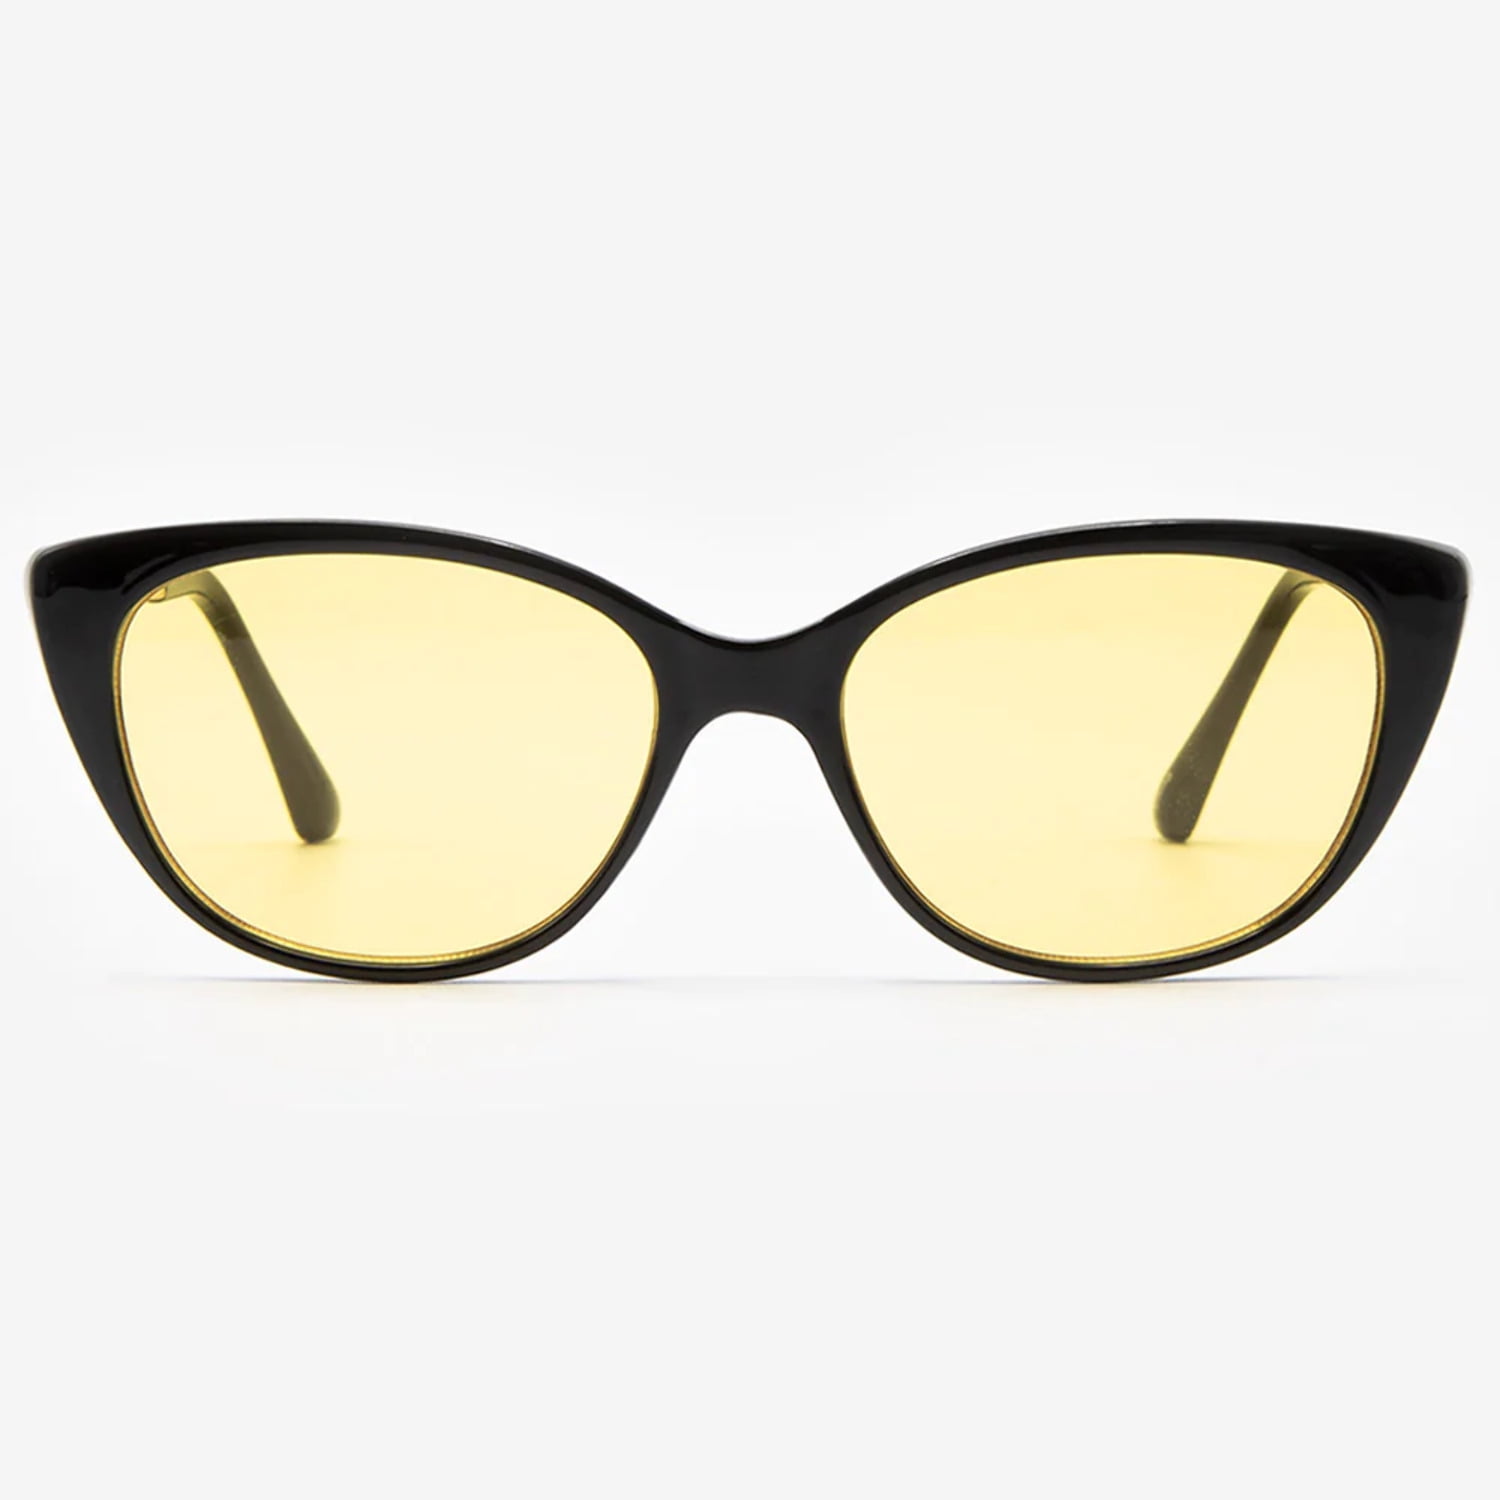 Night Vision Glasses Anti Glare Driving Yellow Tinted Sunglasses Men Women HD Sun Cat Eye Verona Black f8547dea c9e8 48cc 876e b170237d5636.480af8536a96760c434d9b1232c4752d